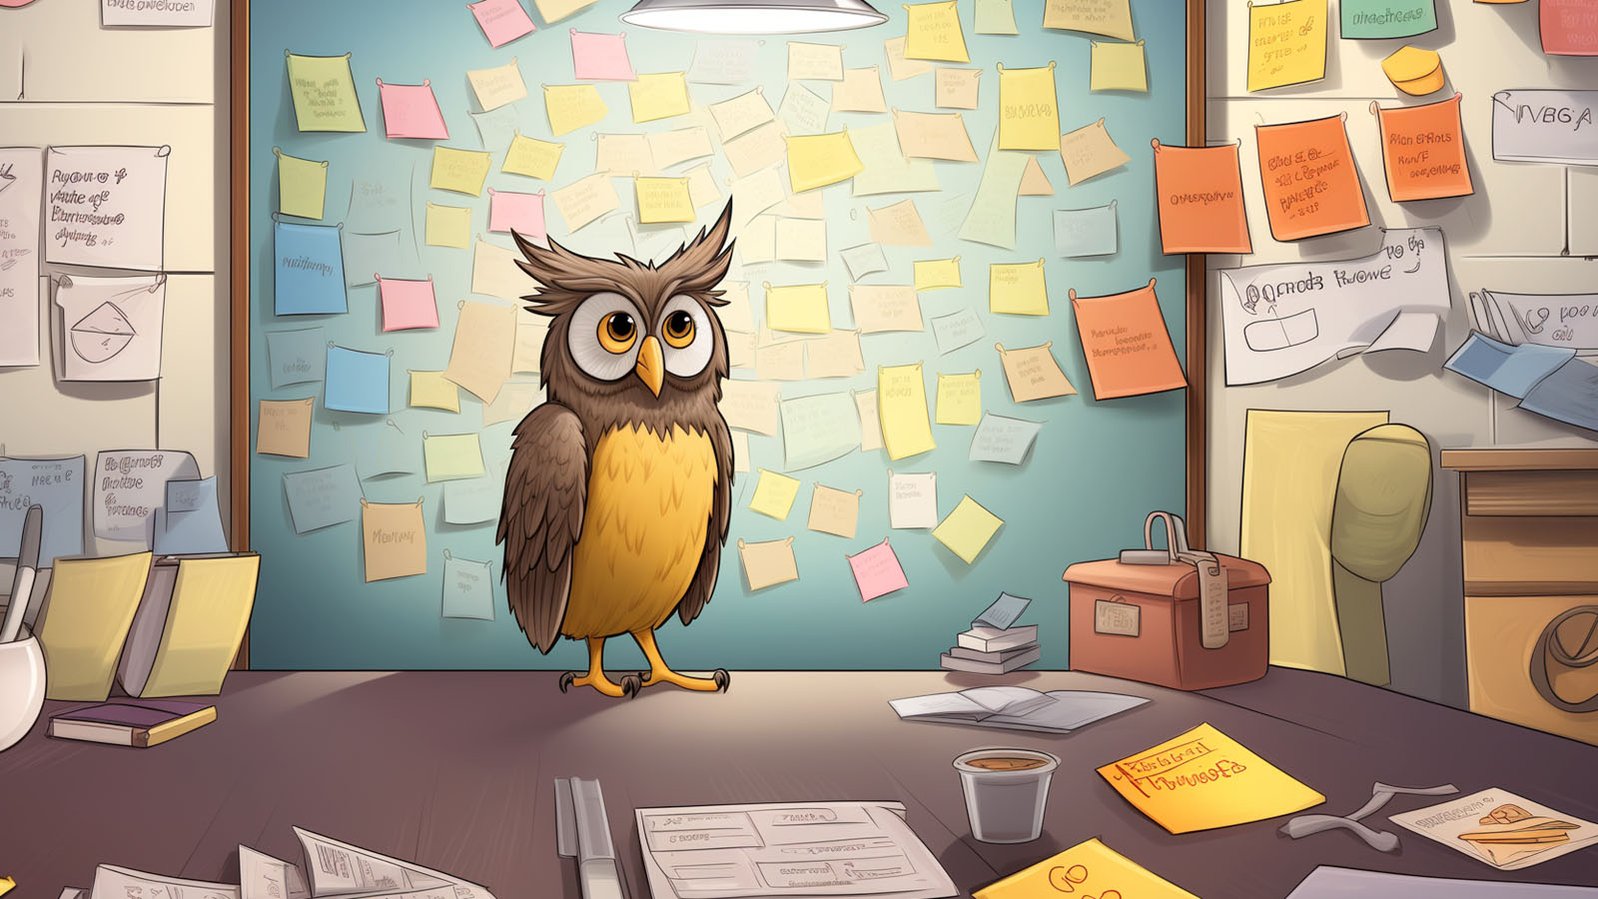 Owl Brainstorming business name ideas